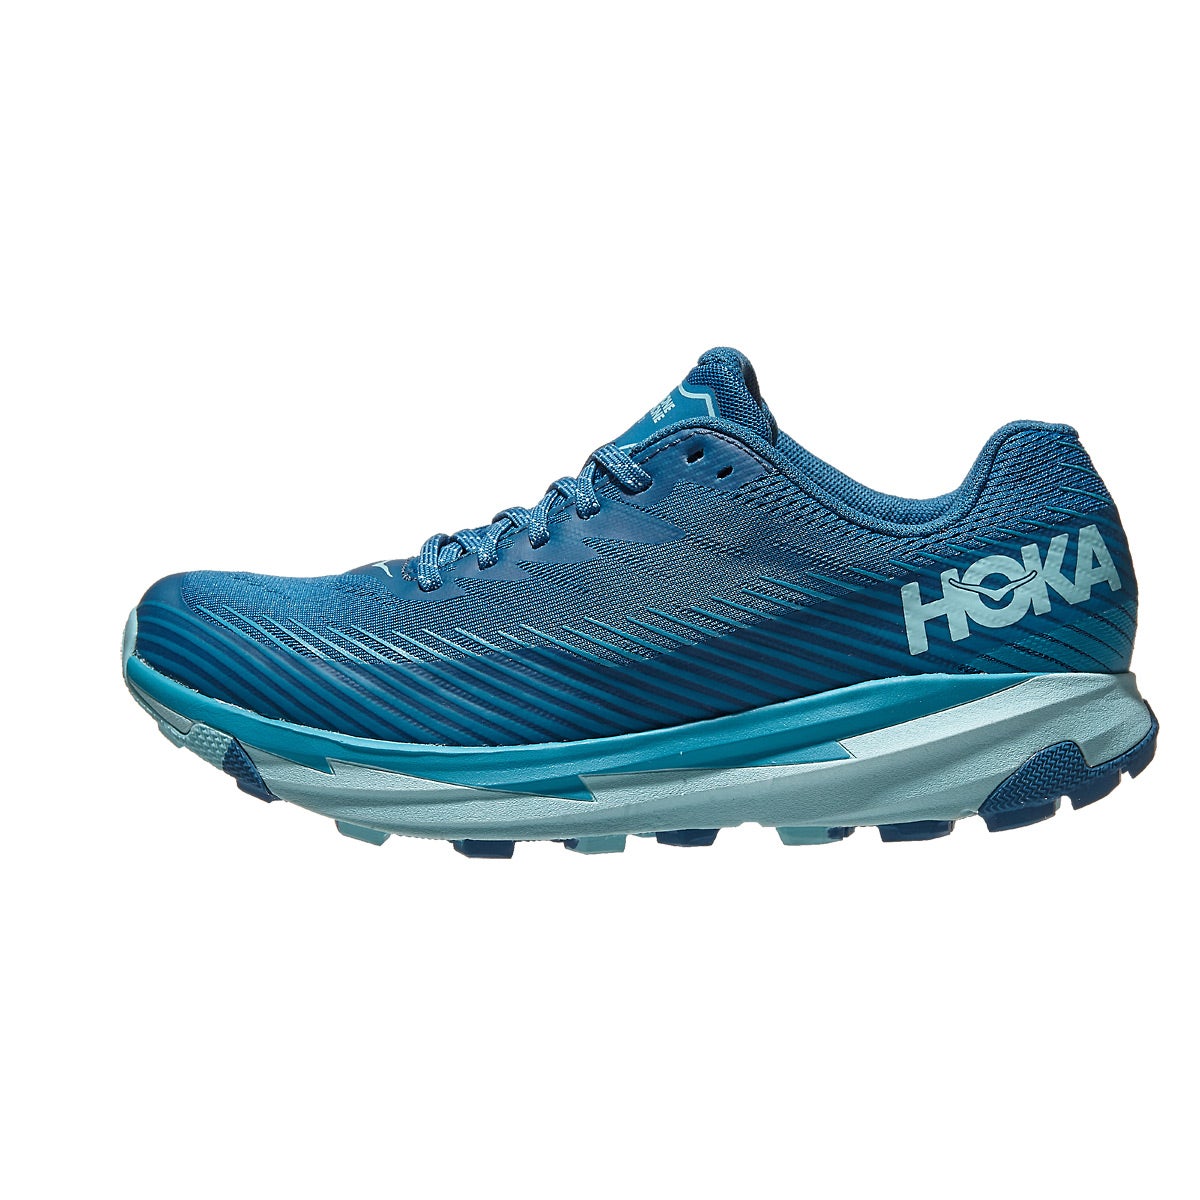 HOKA ONE ONE Torrent 2 Women's Shoes Blue Sapphire 360° View | Running ...